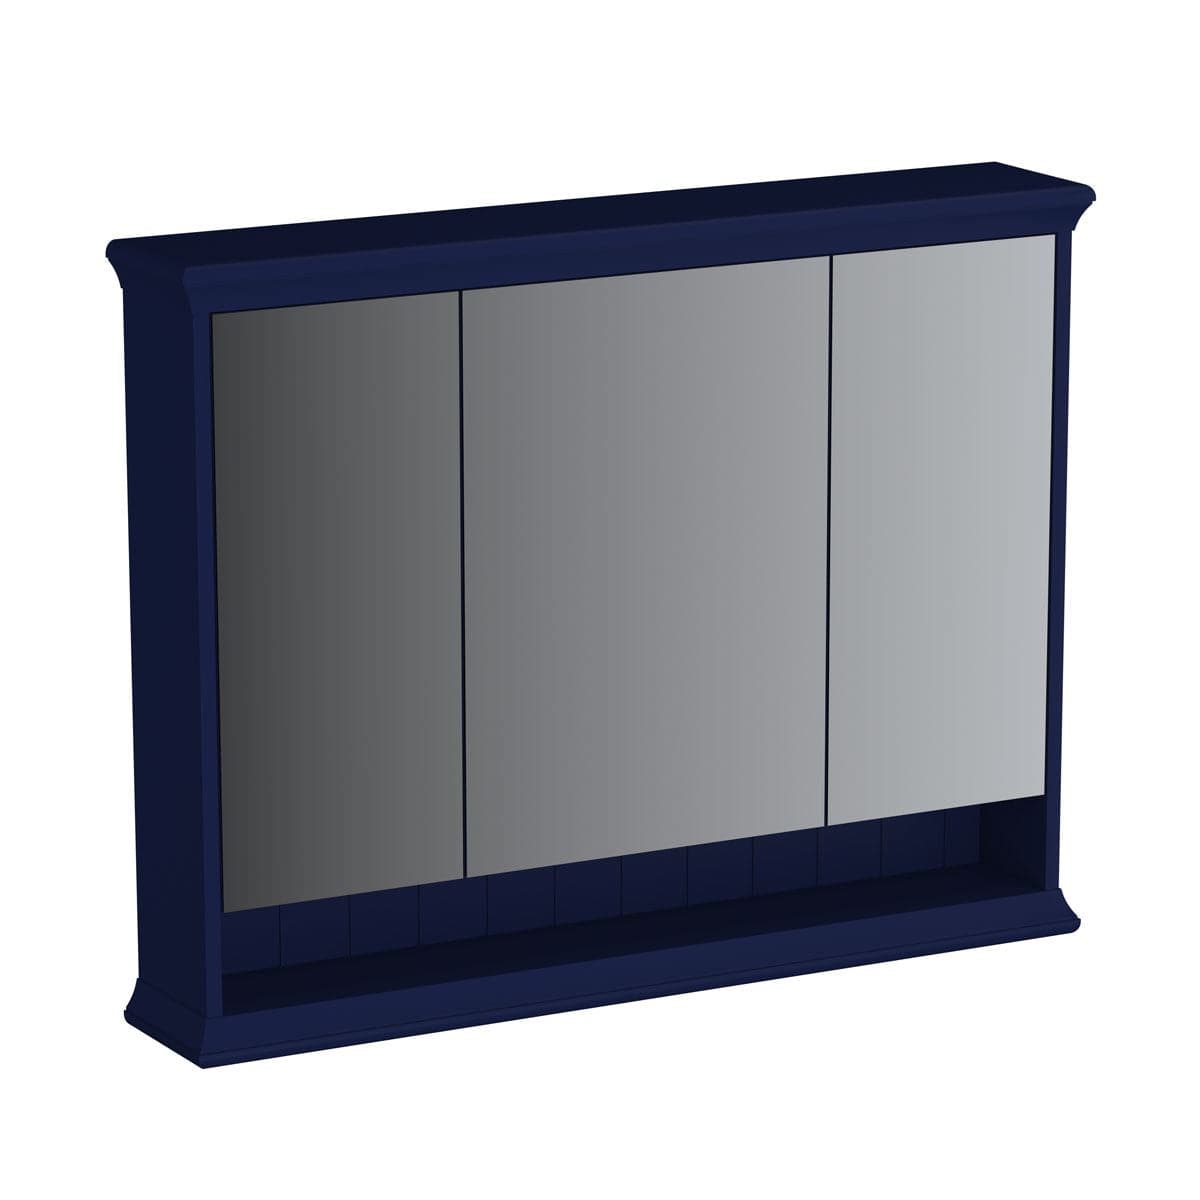 VitrA Valarte LED-Spiegelschrank 98 cm 3 Türen Stahlblau (Lack)